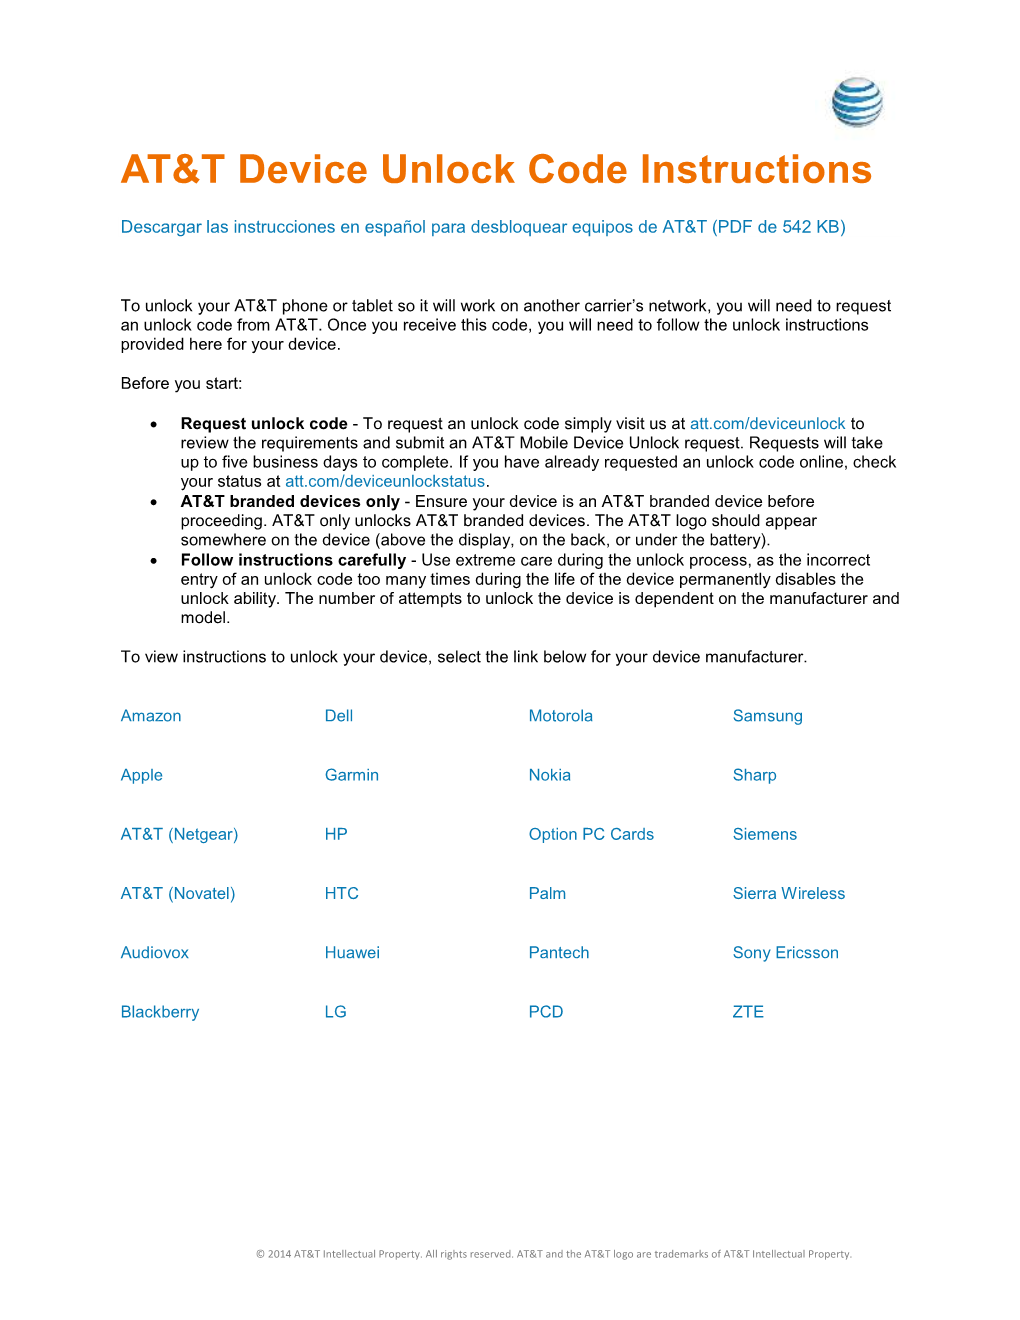 AT&T Unlock Code Instructions